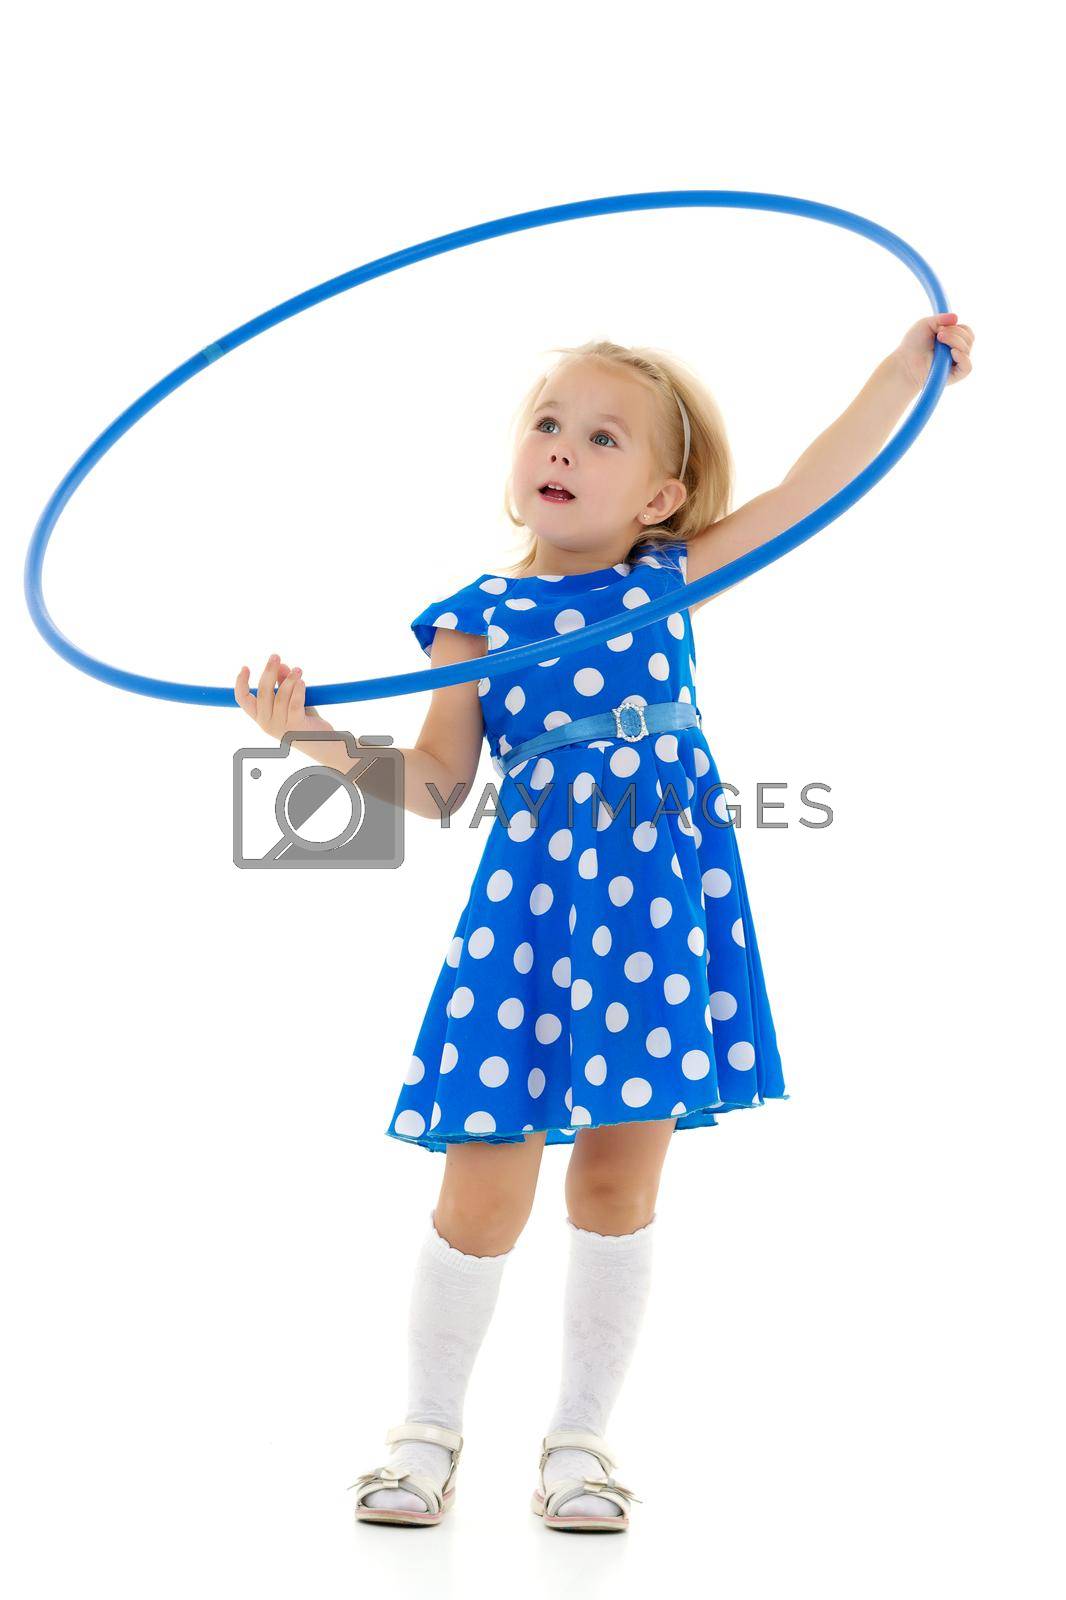 Royalty free image of The little girl turns the hoop. by kolesnikov_studio